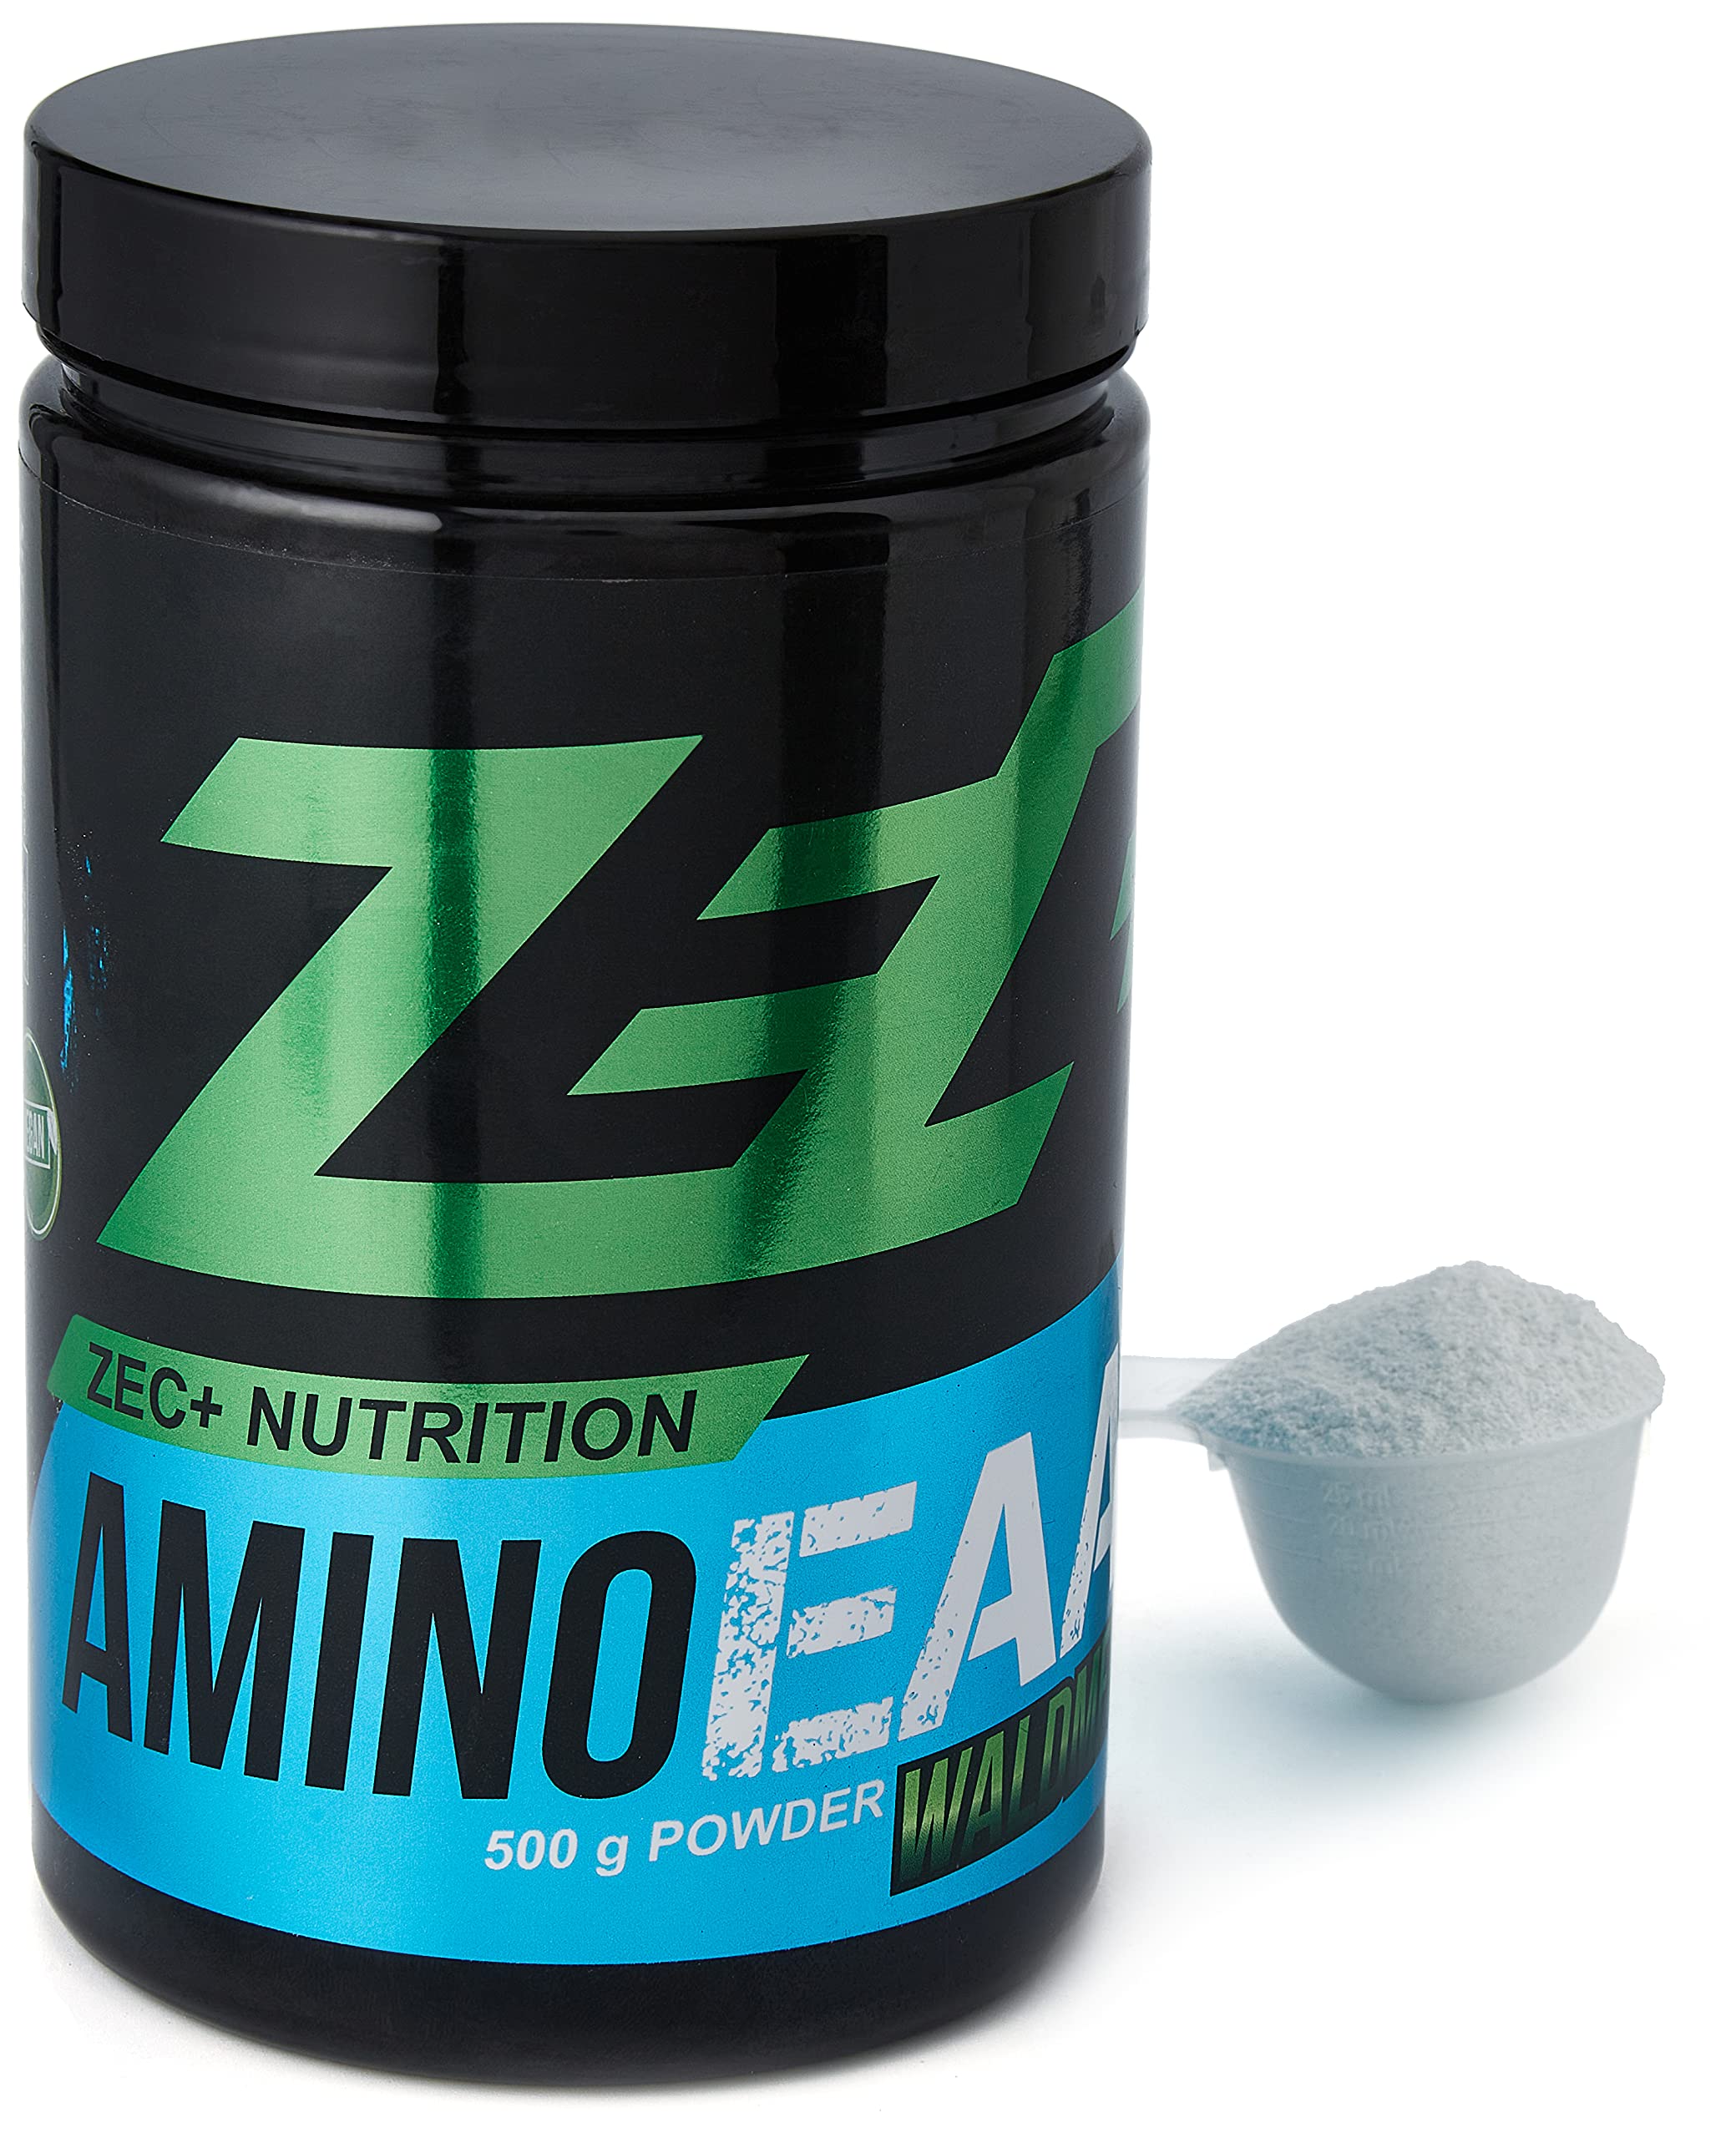 Zec+ Nutrition Amino EAA Pulver – 500g, Geschmack Waldmeister │ Aminosäuren Pulver mit EAAs & BCAAs